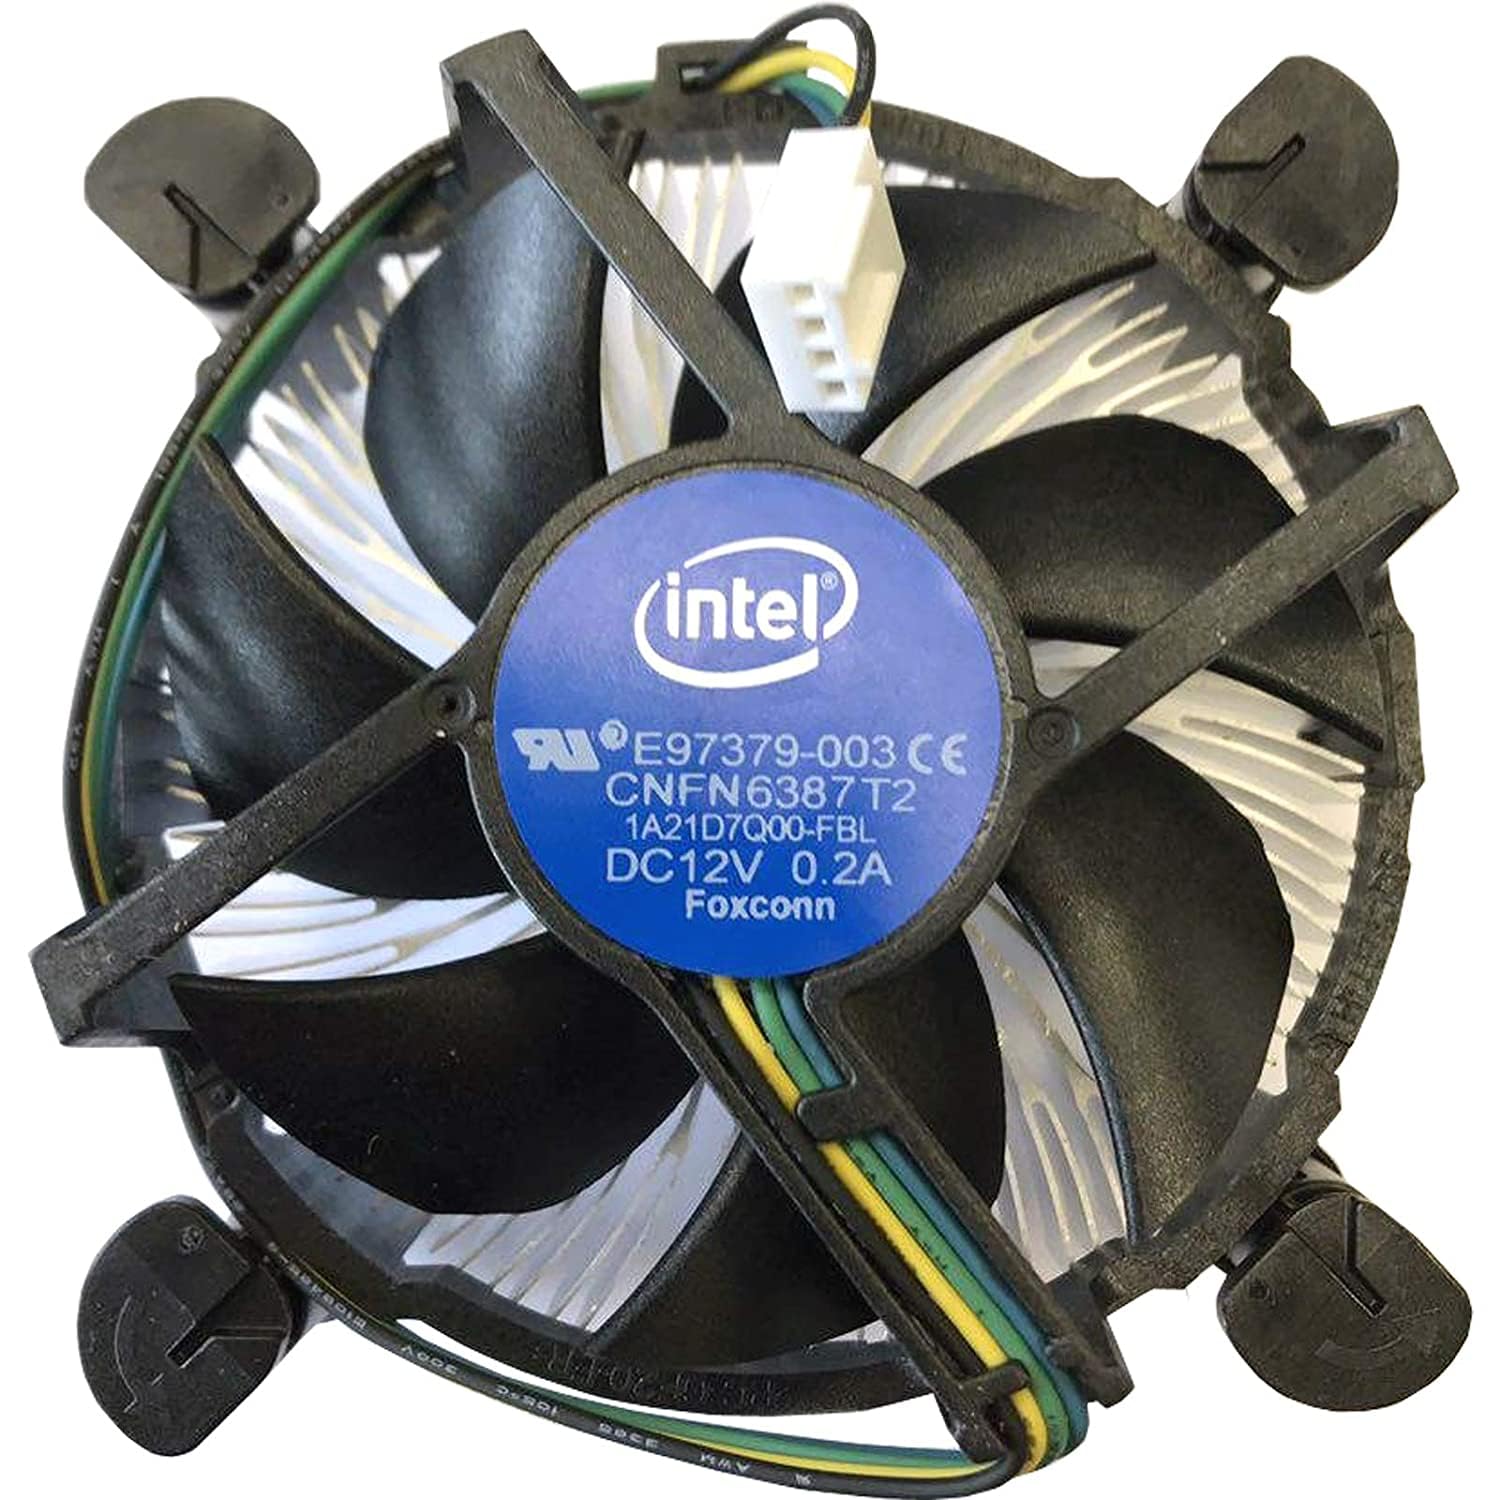 intel E97379-001 CPU COOLER FOR 1155/1156/1150 - INTEL